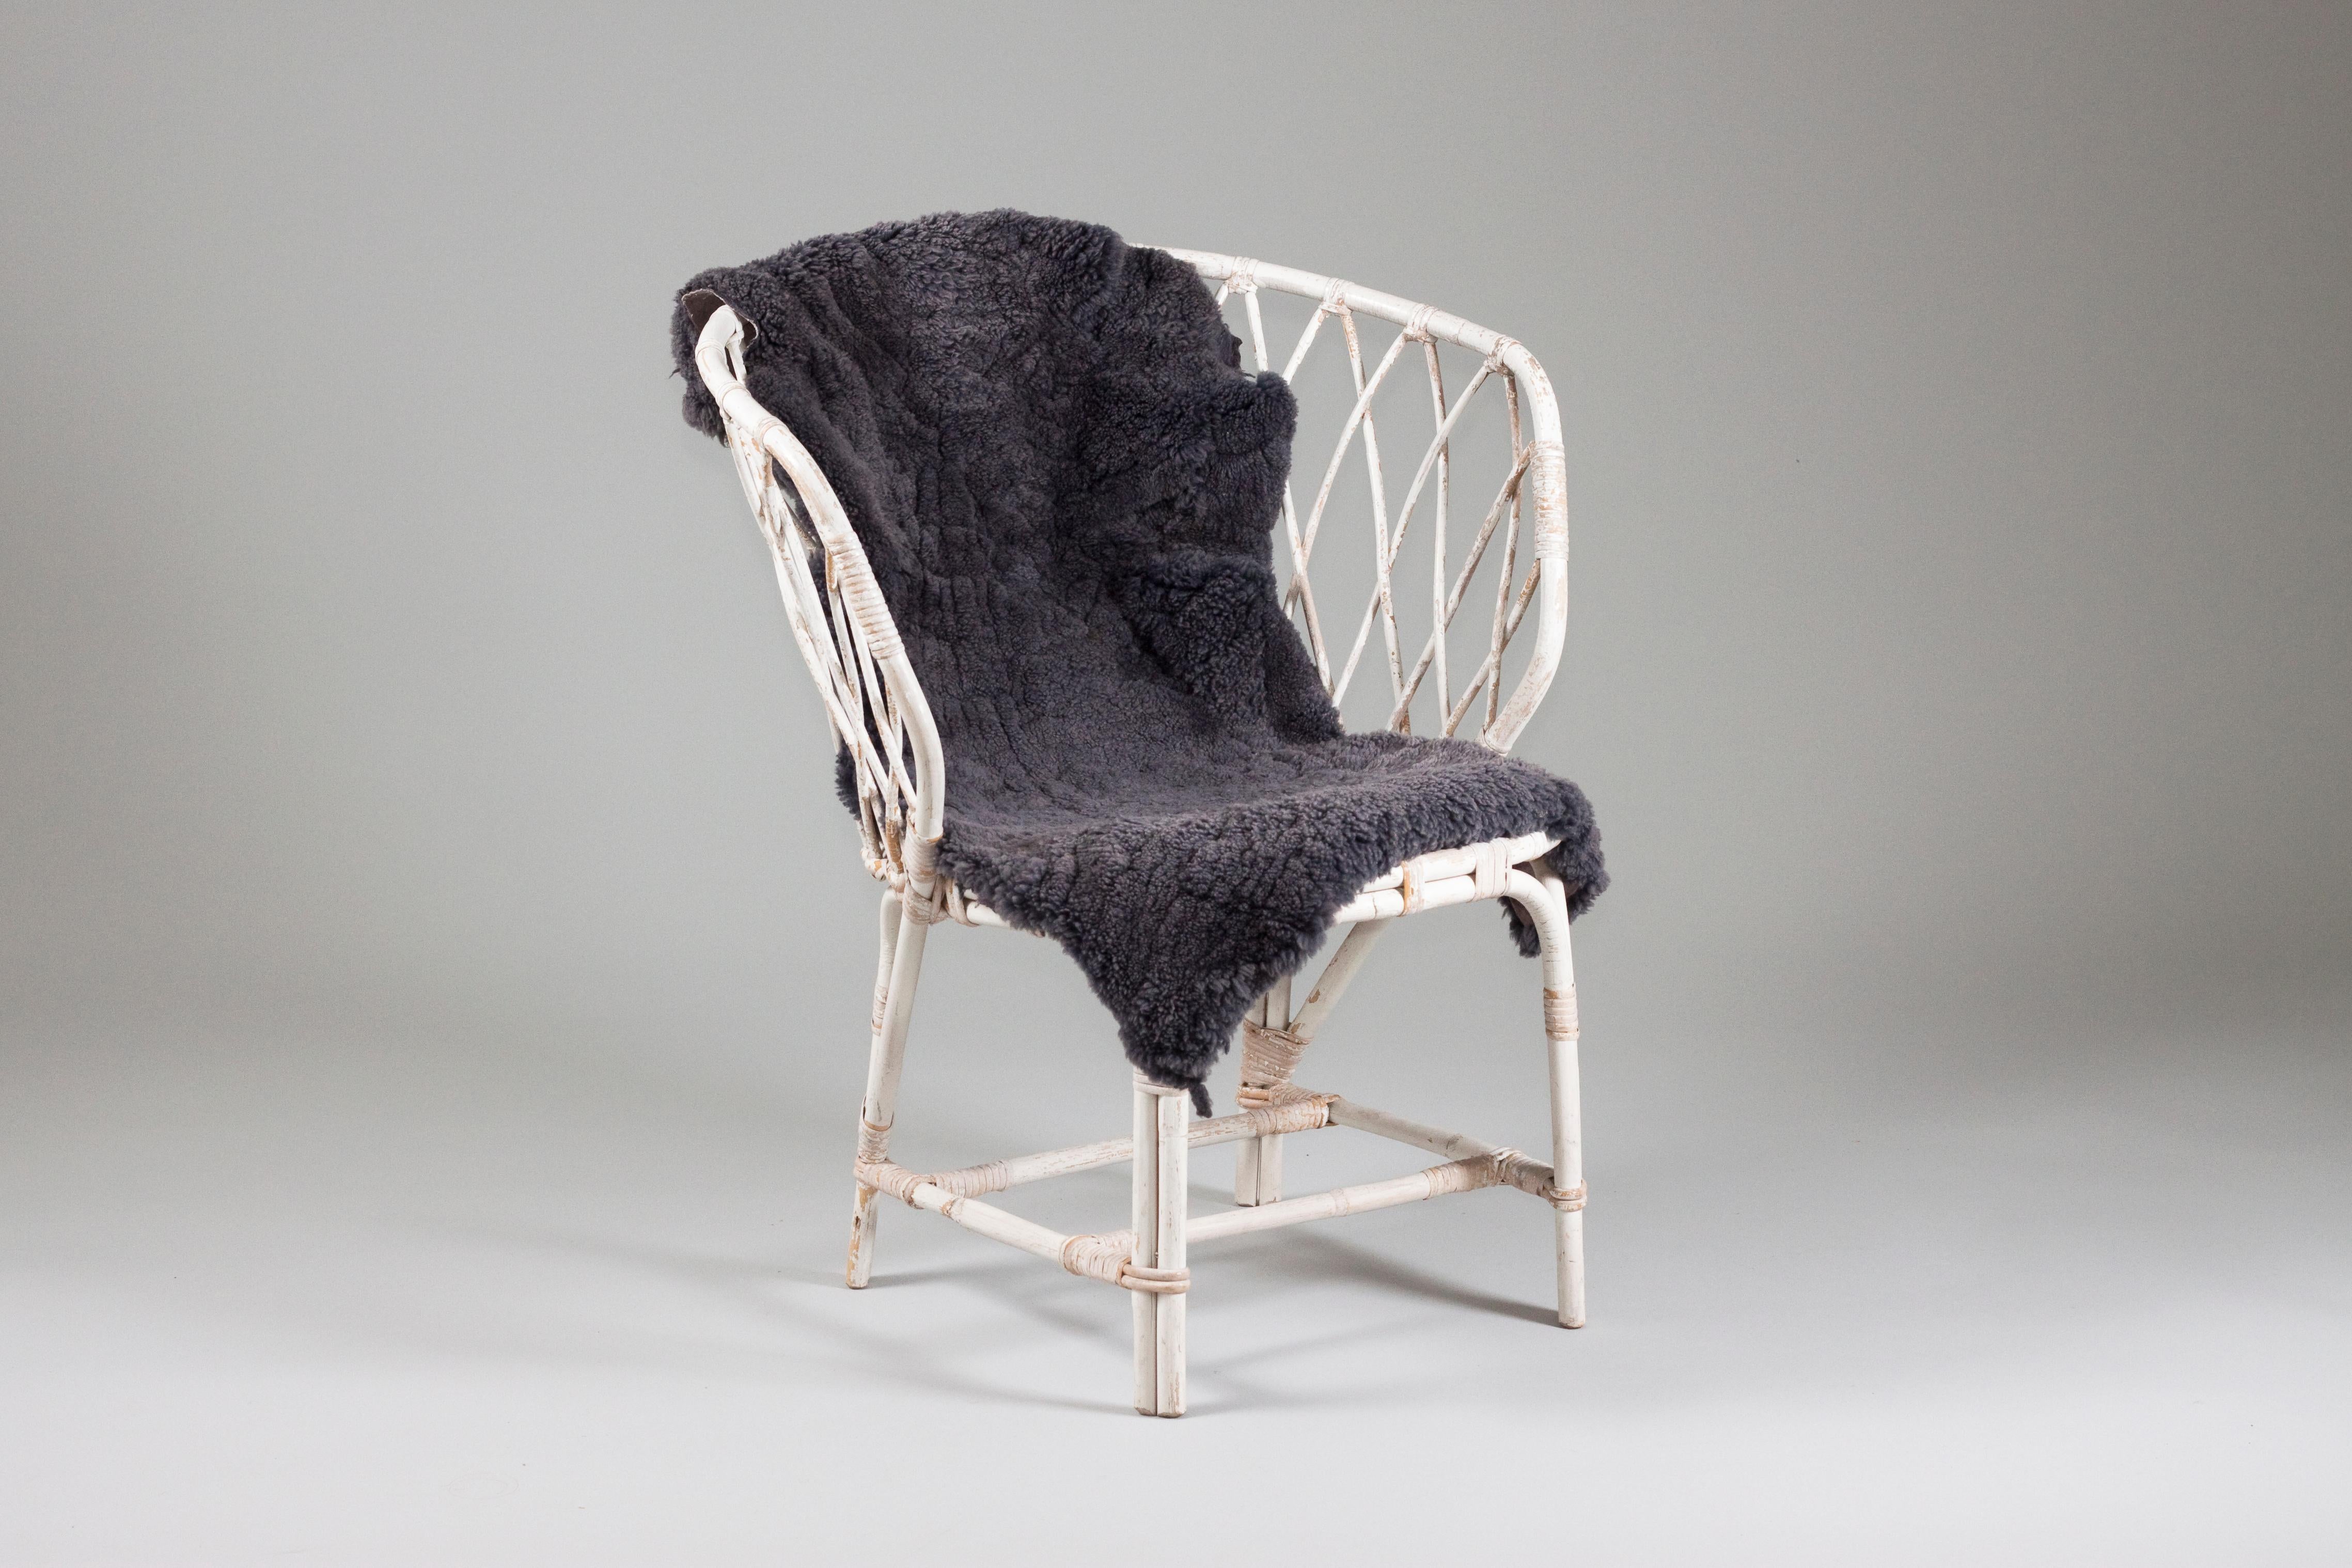 20th Century Pair of Mid-Century Modern Rattan Chairs by Maija Heikinheimo for Artek, Finland